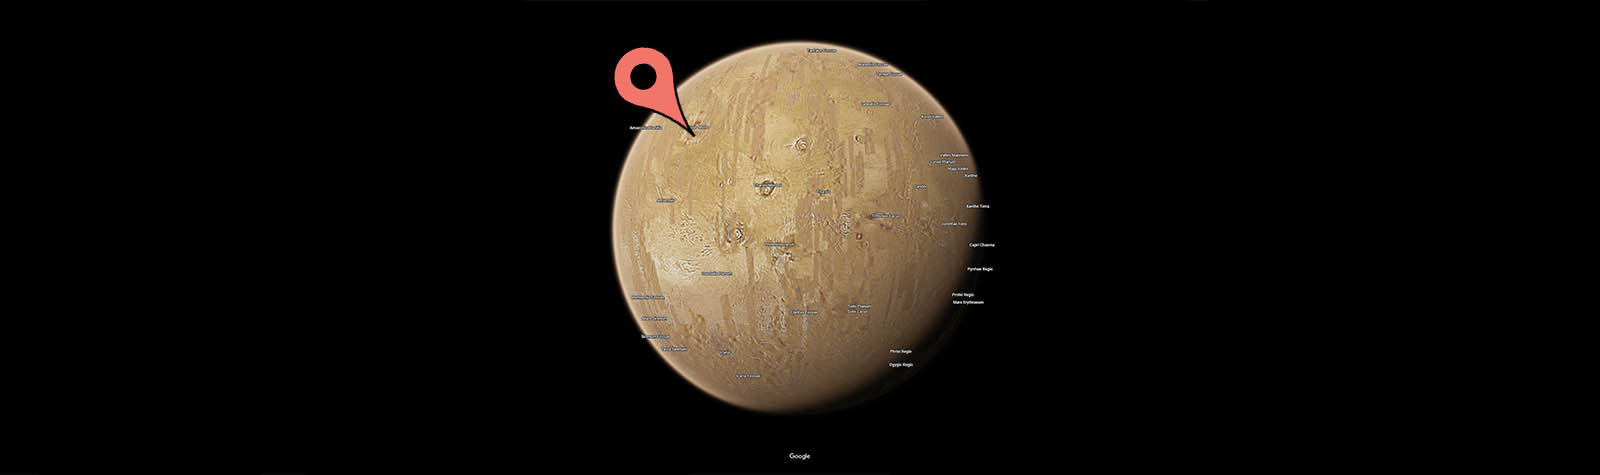 Como visitar otros planetas a través de Google Maps